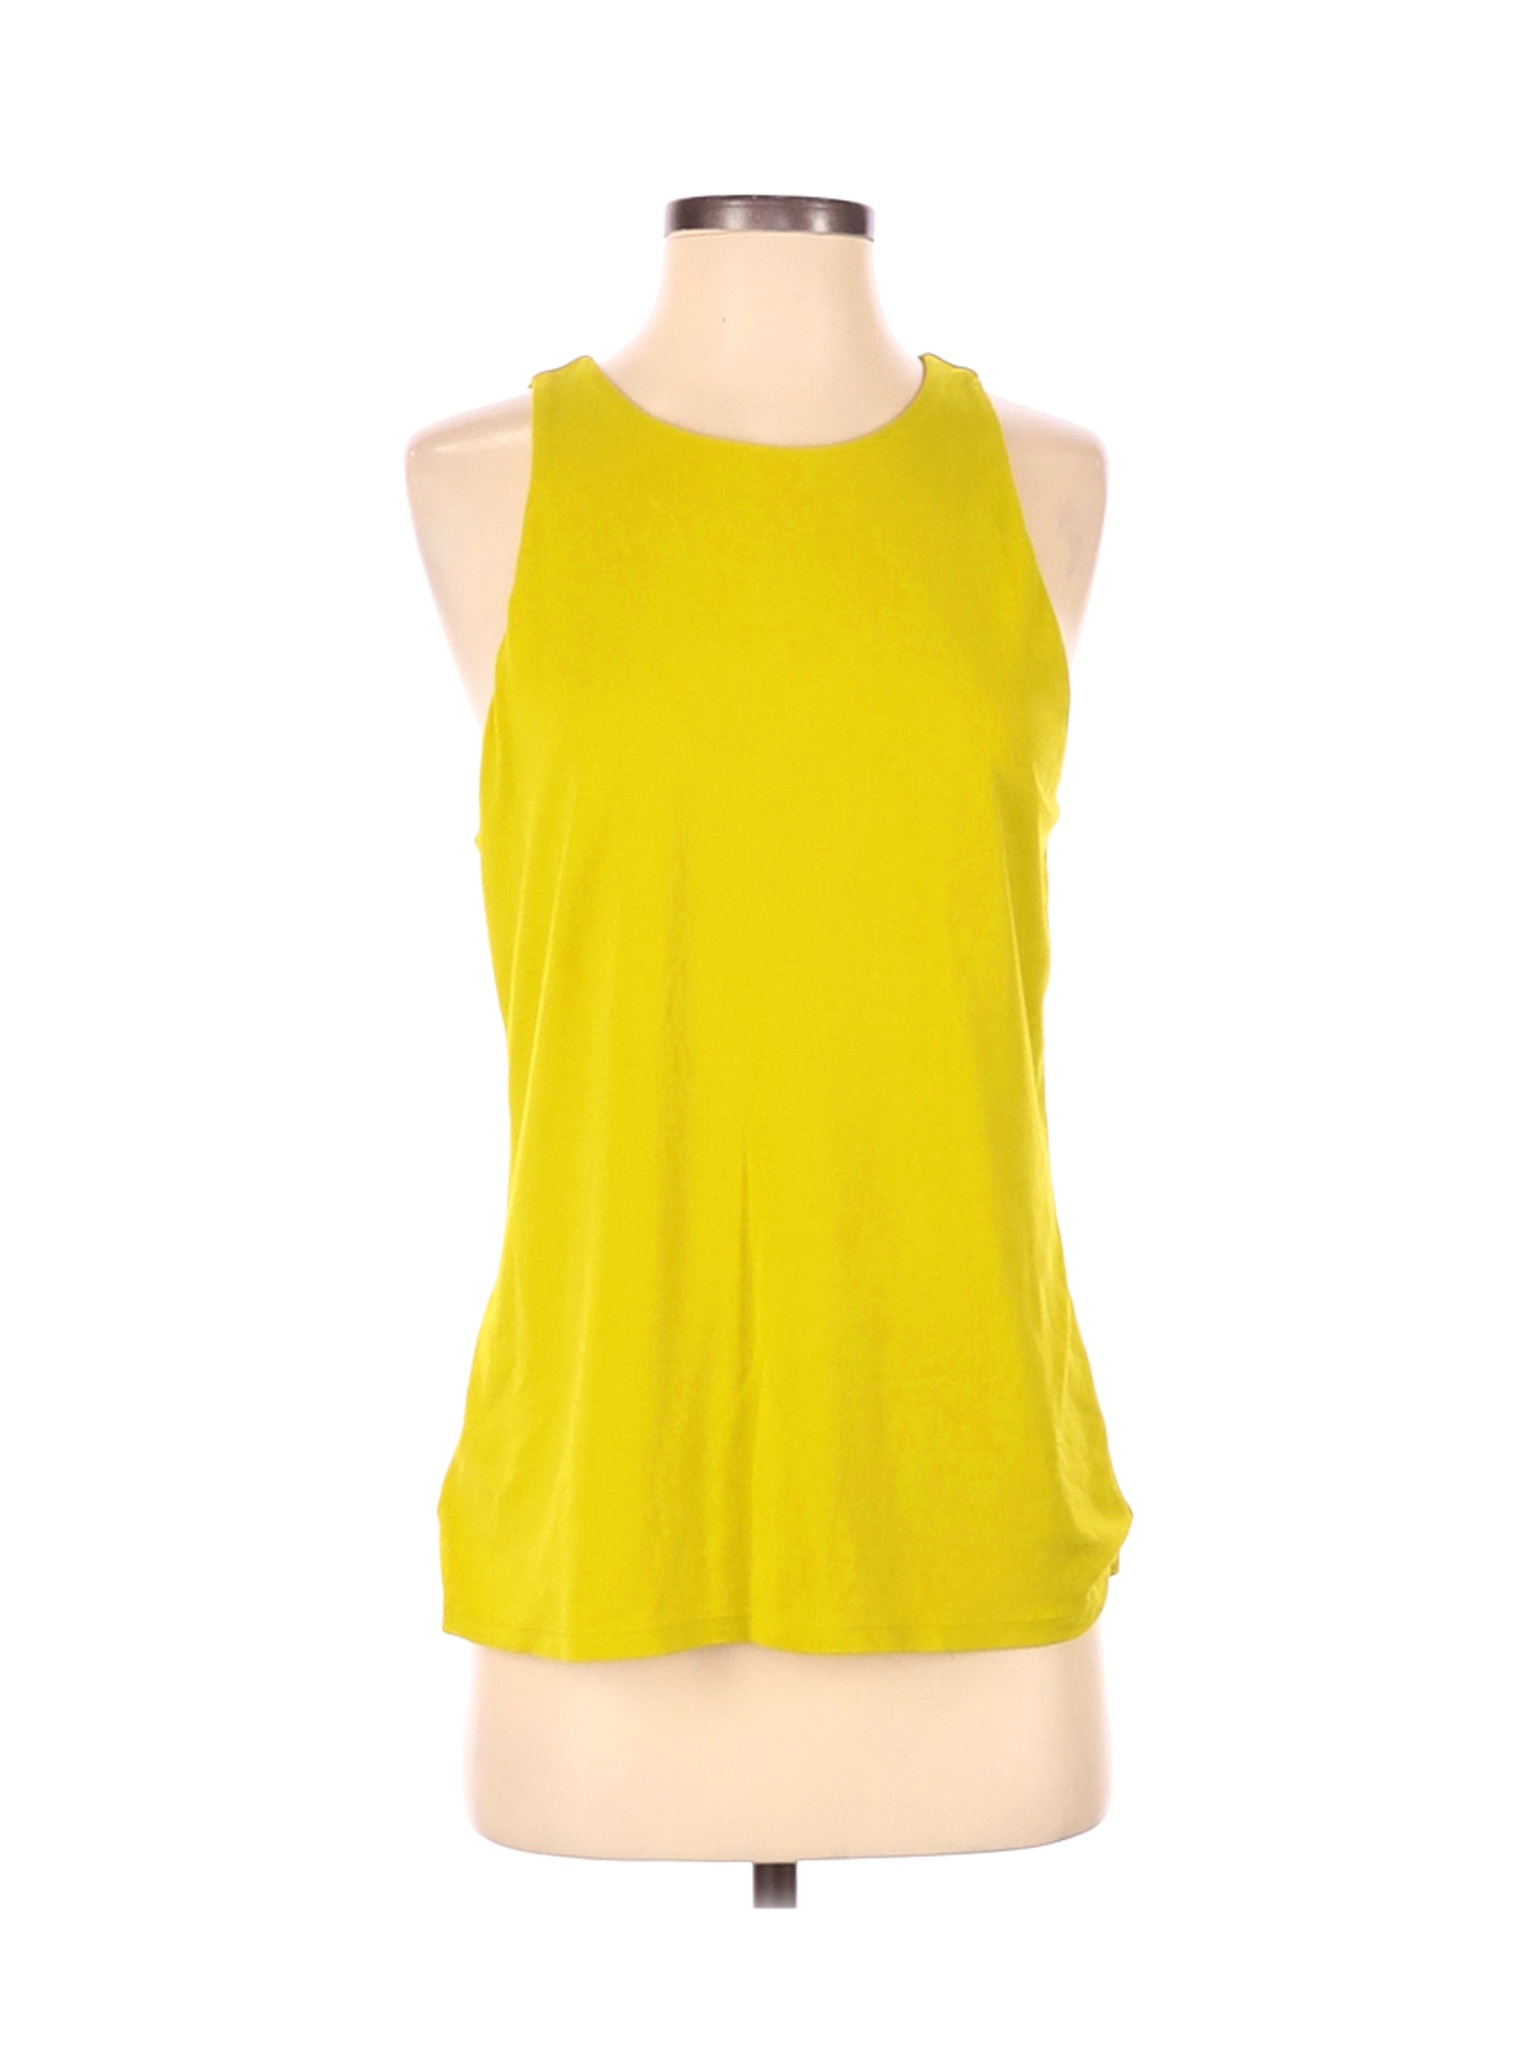 Ann Taylor Women Yellow Sleeveless Blouse S | eBay